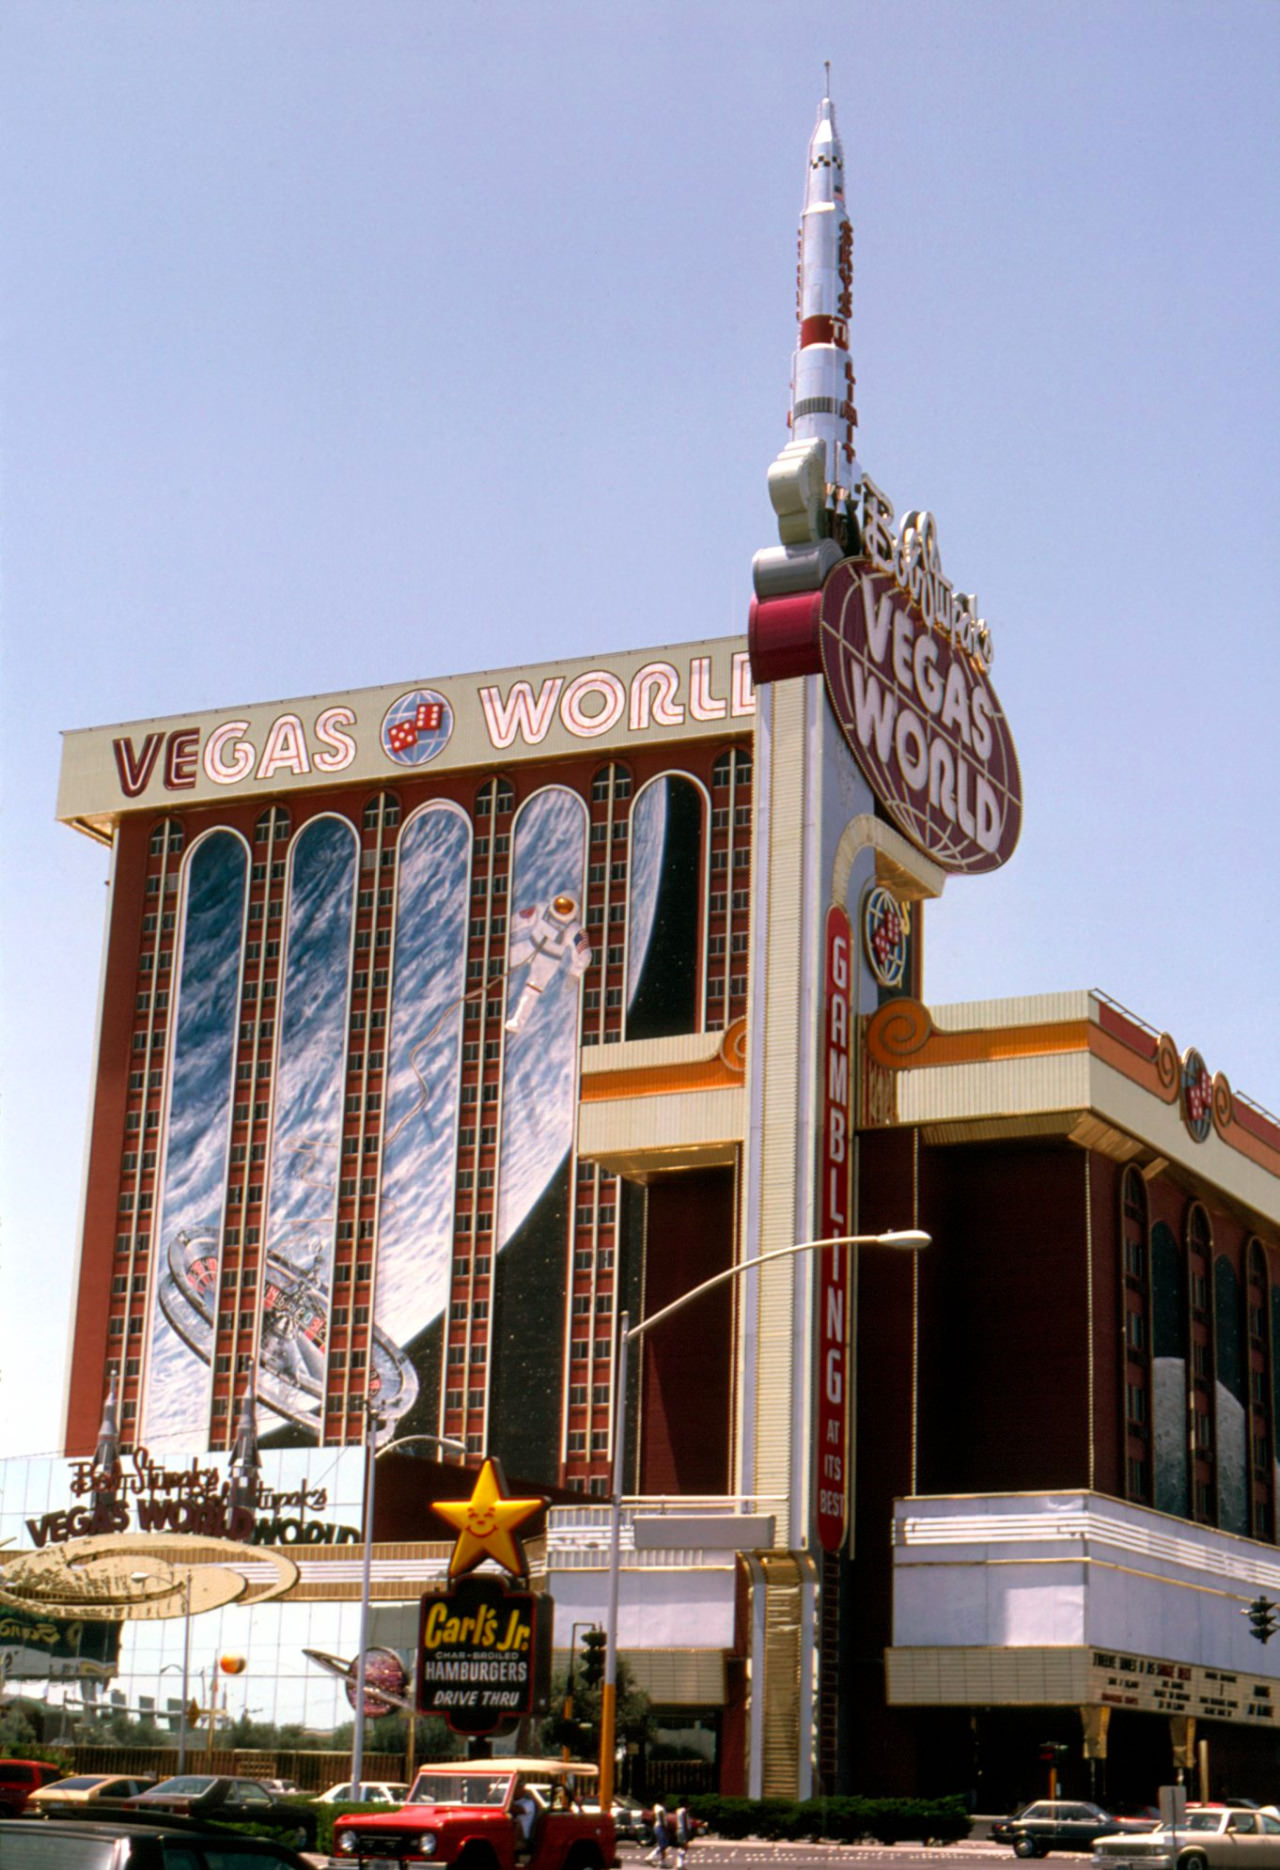 Vegas World sign, 1991